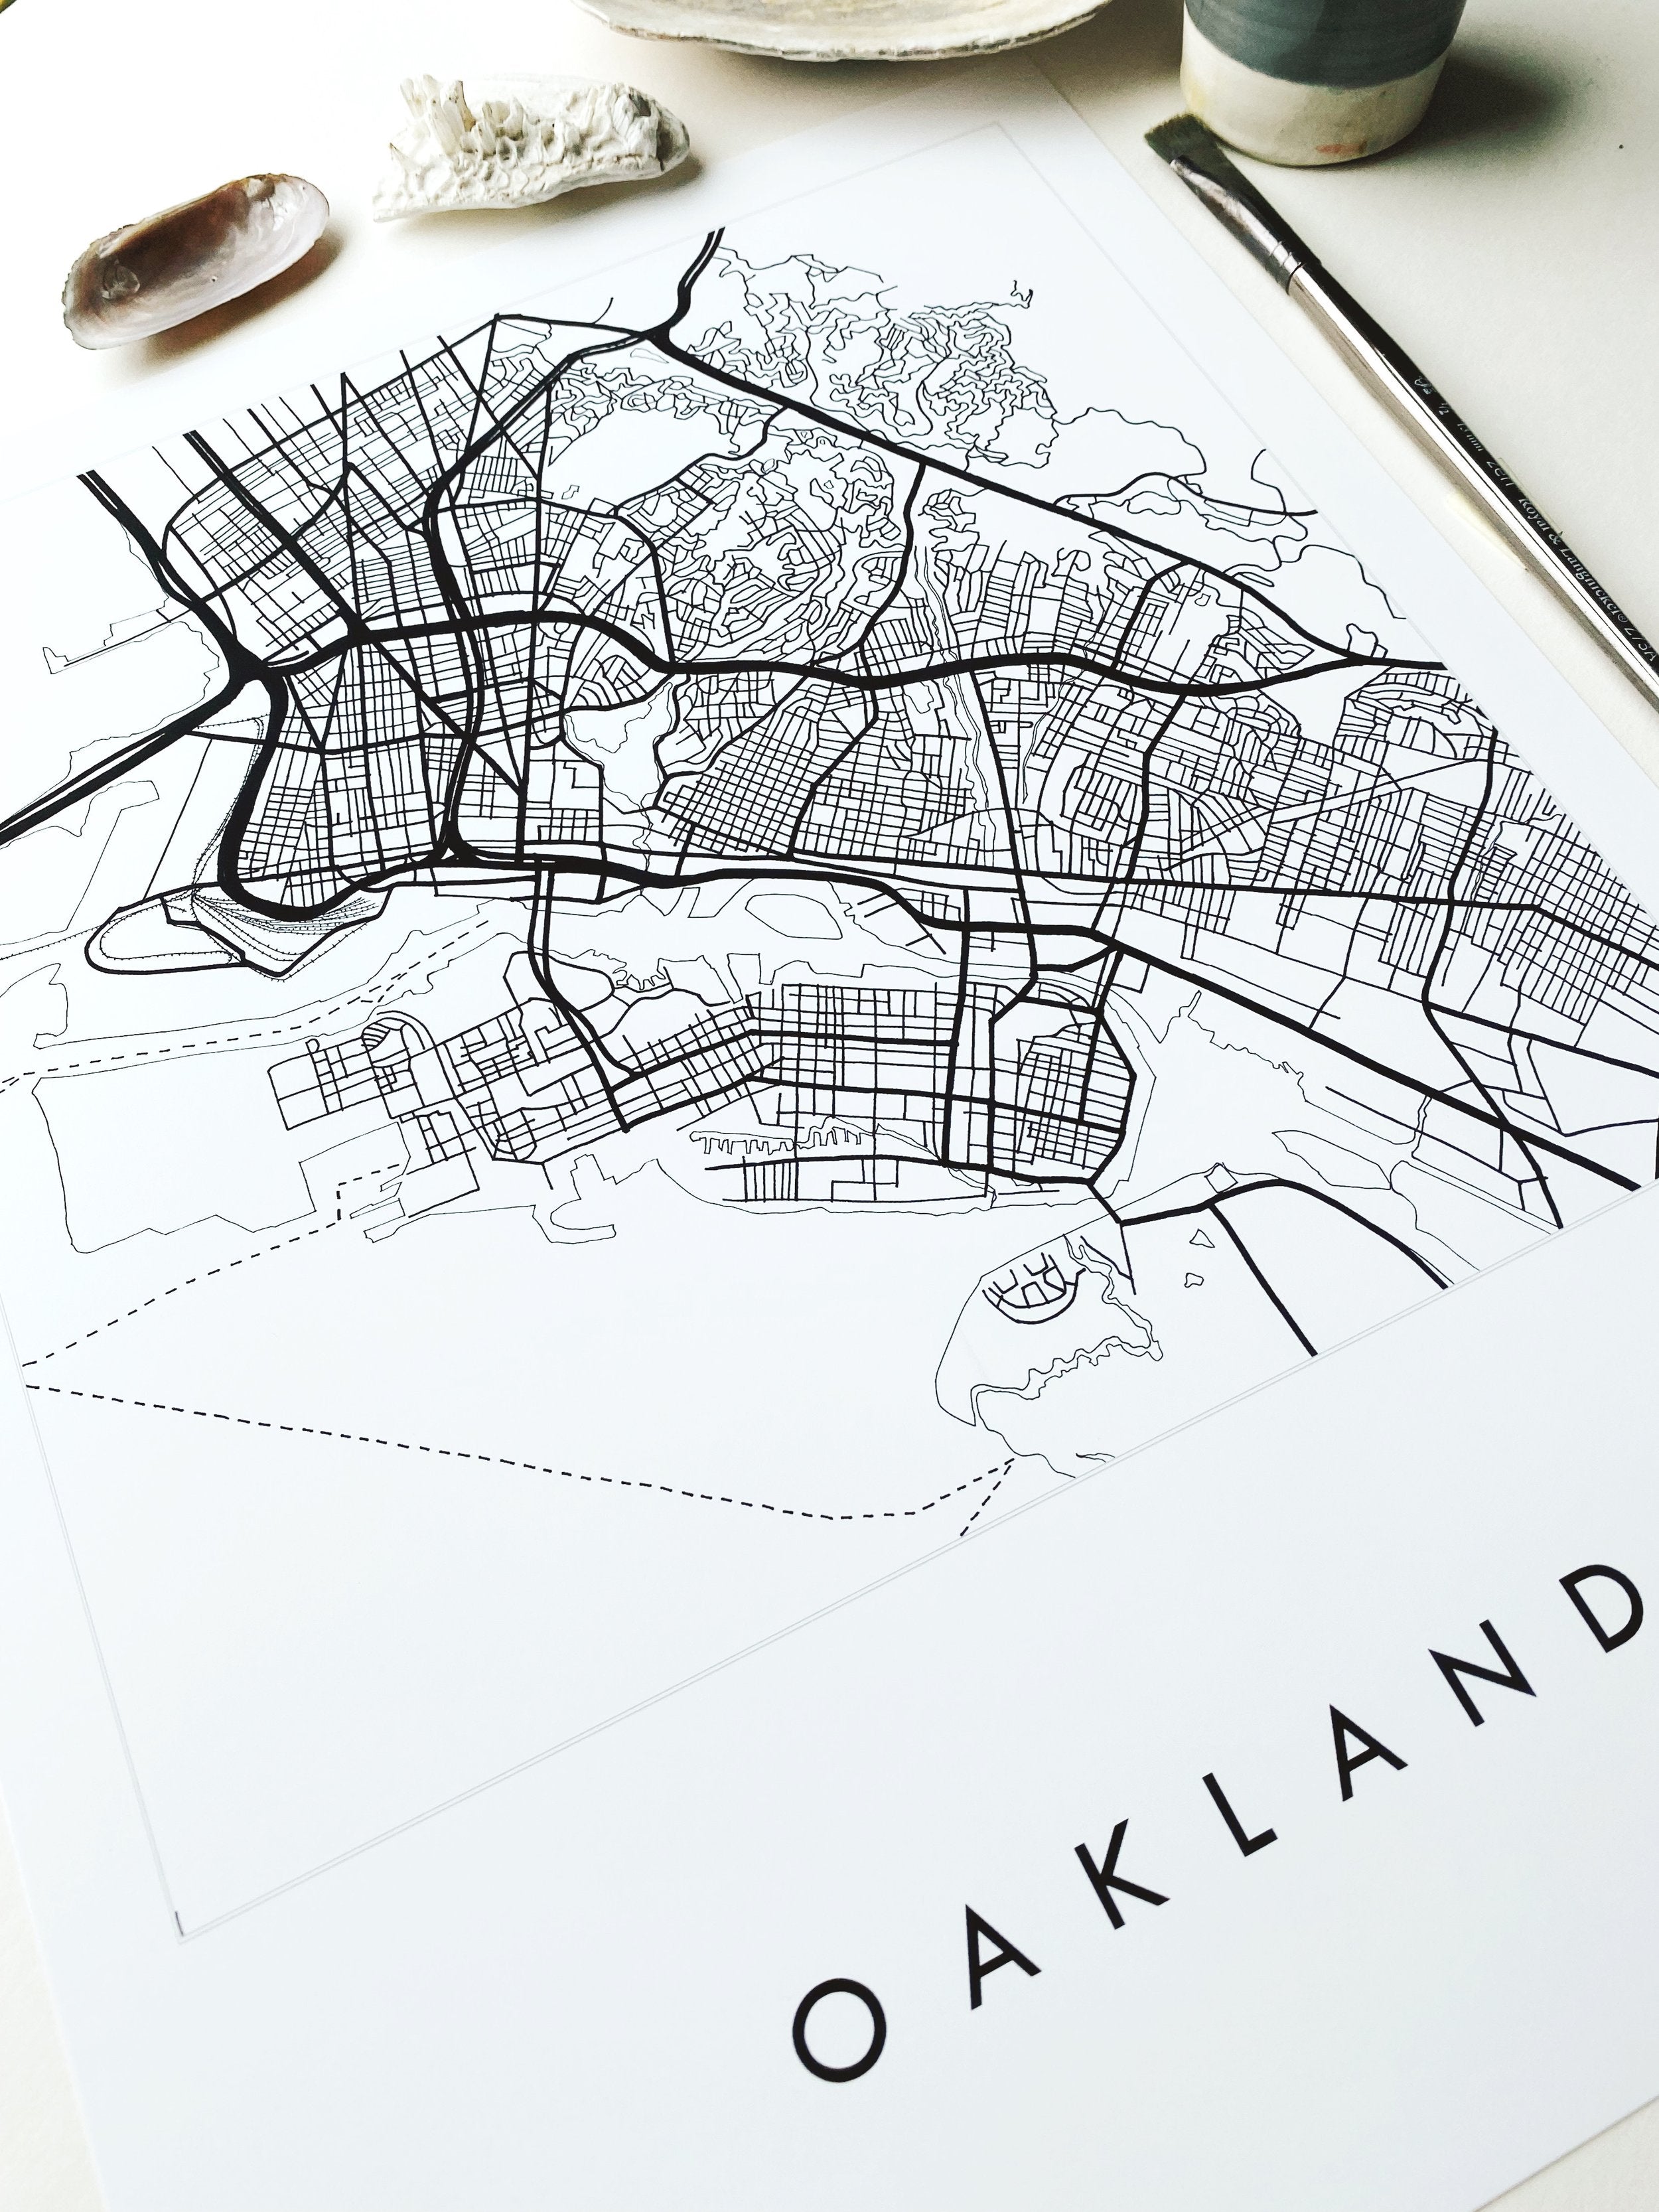 OAKLAND City Lines Map: PRINT